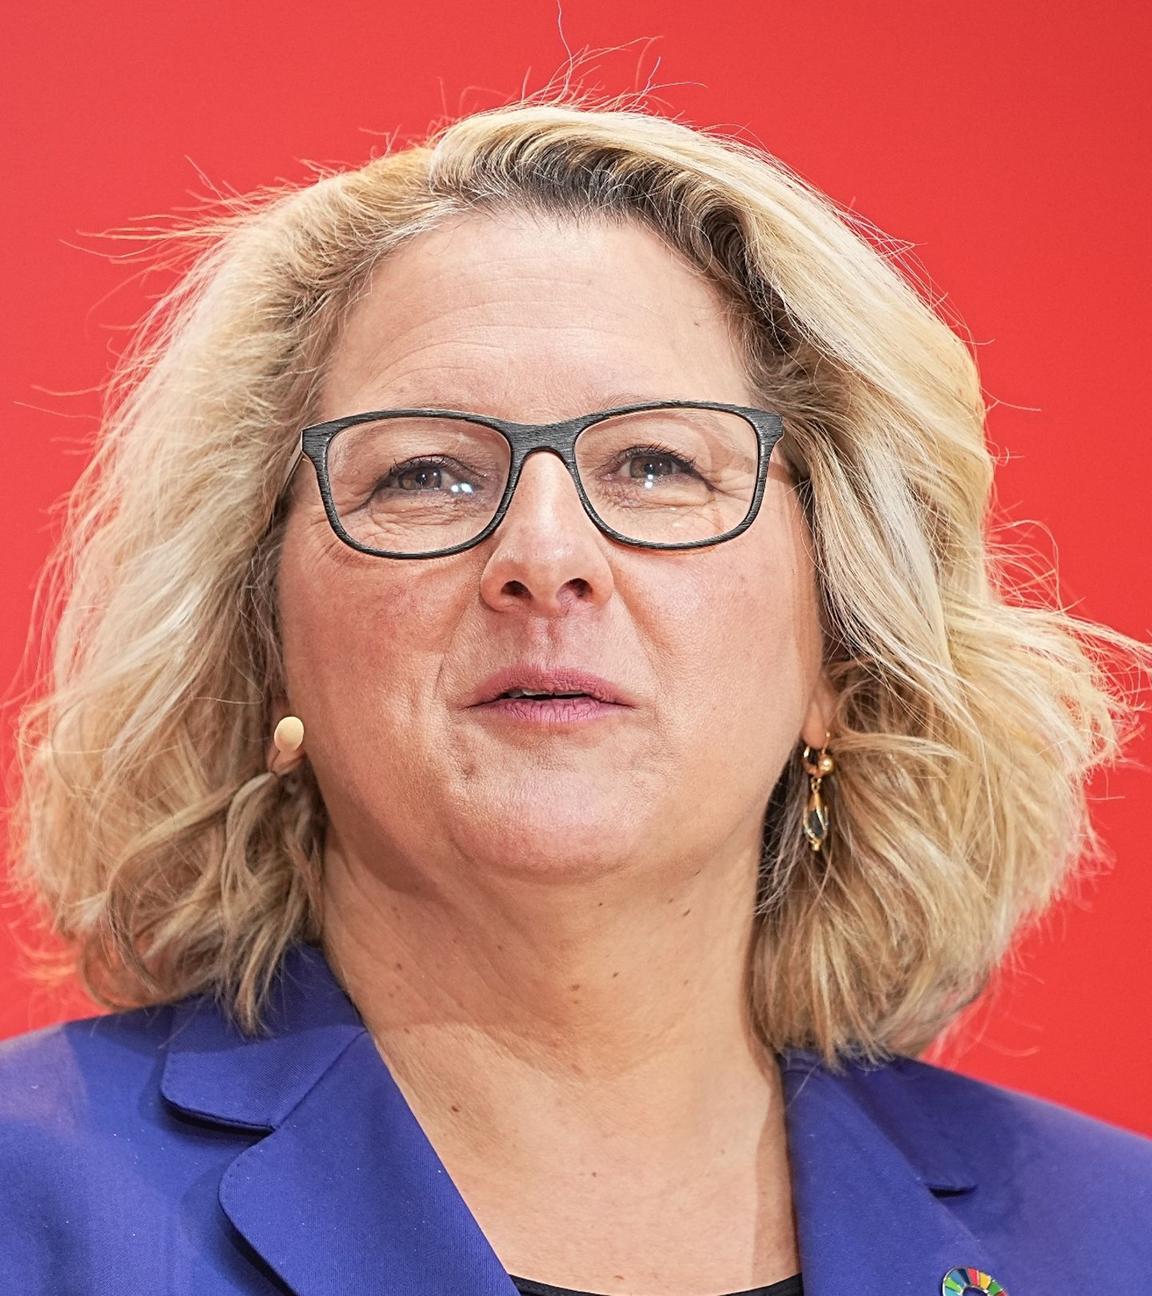 Svenja Schulze (SPD), Bundesentwicklungsministerin. Archivbild